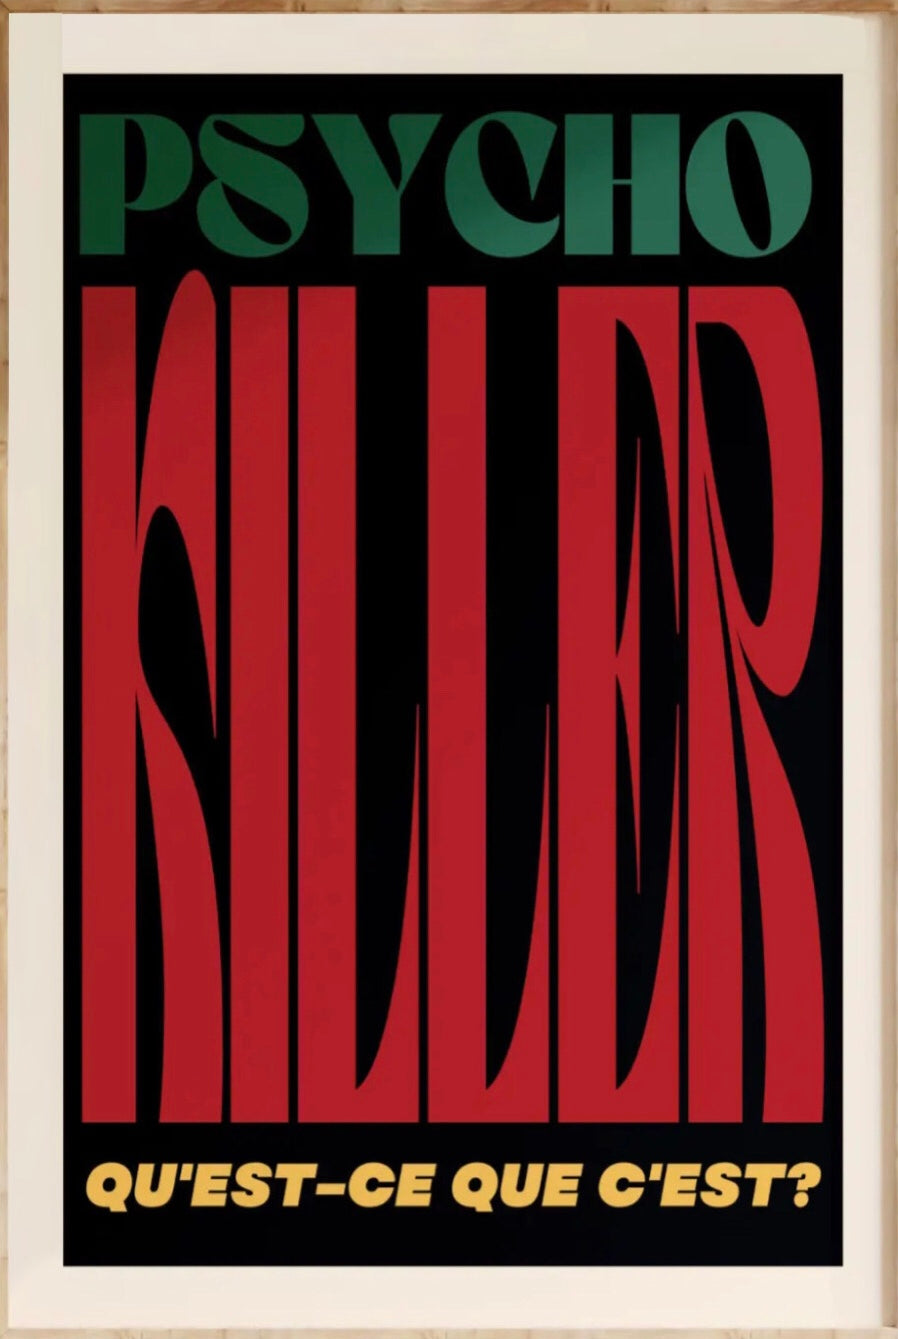 " psycho killer " poster